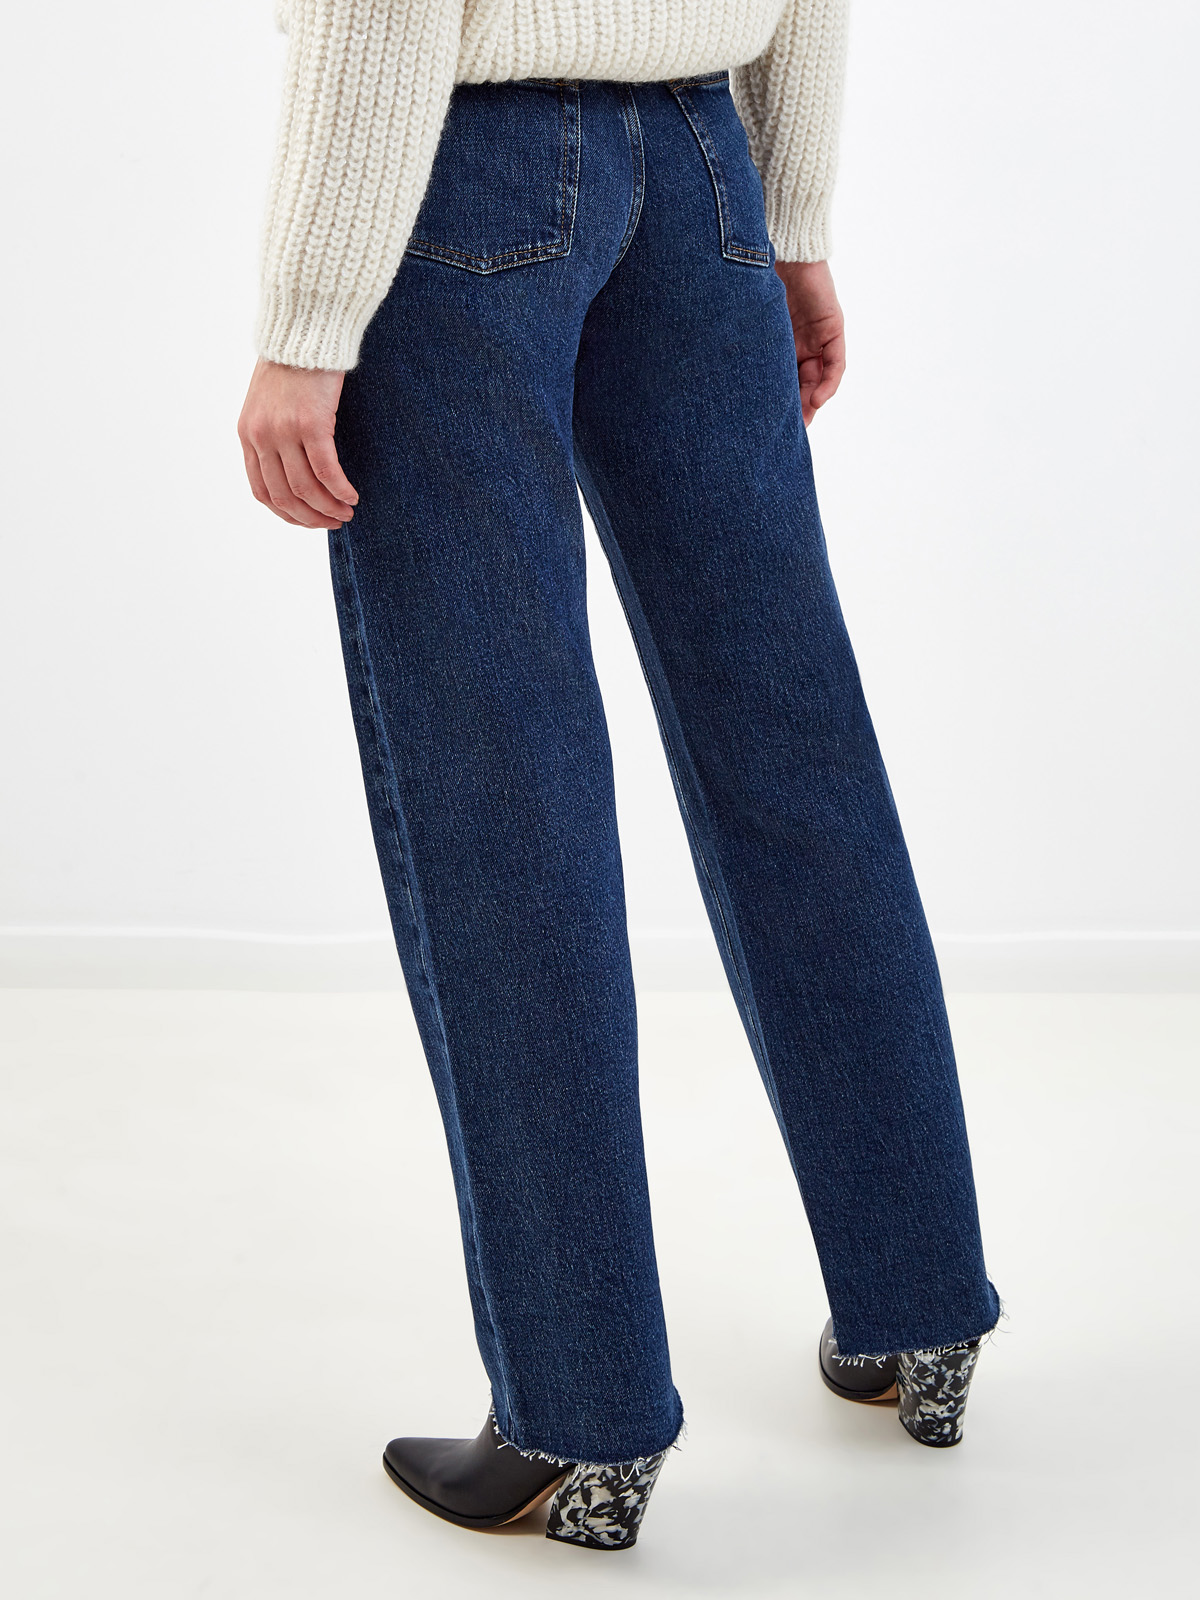 Прямые джинсы Tess в стиле 90-х с необработанным краем 7 FOR ALL MANKIND, цвет синий, размер S;M;M;L;L;XS - фото 4